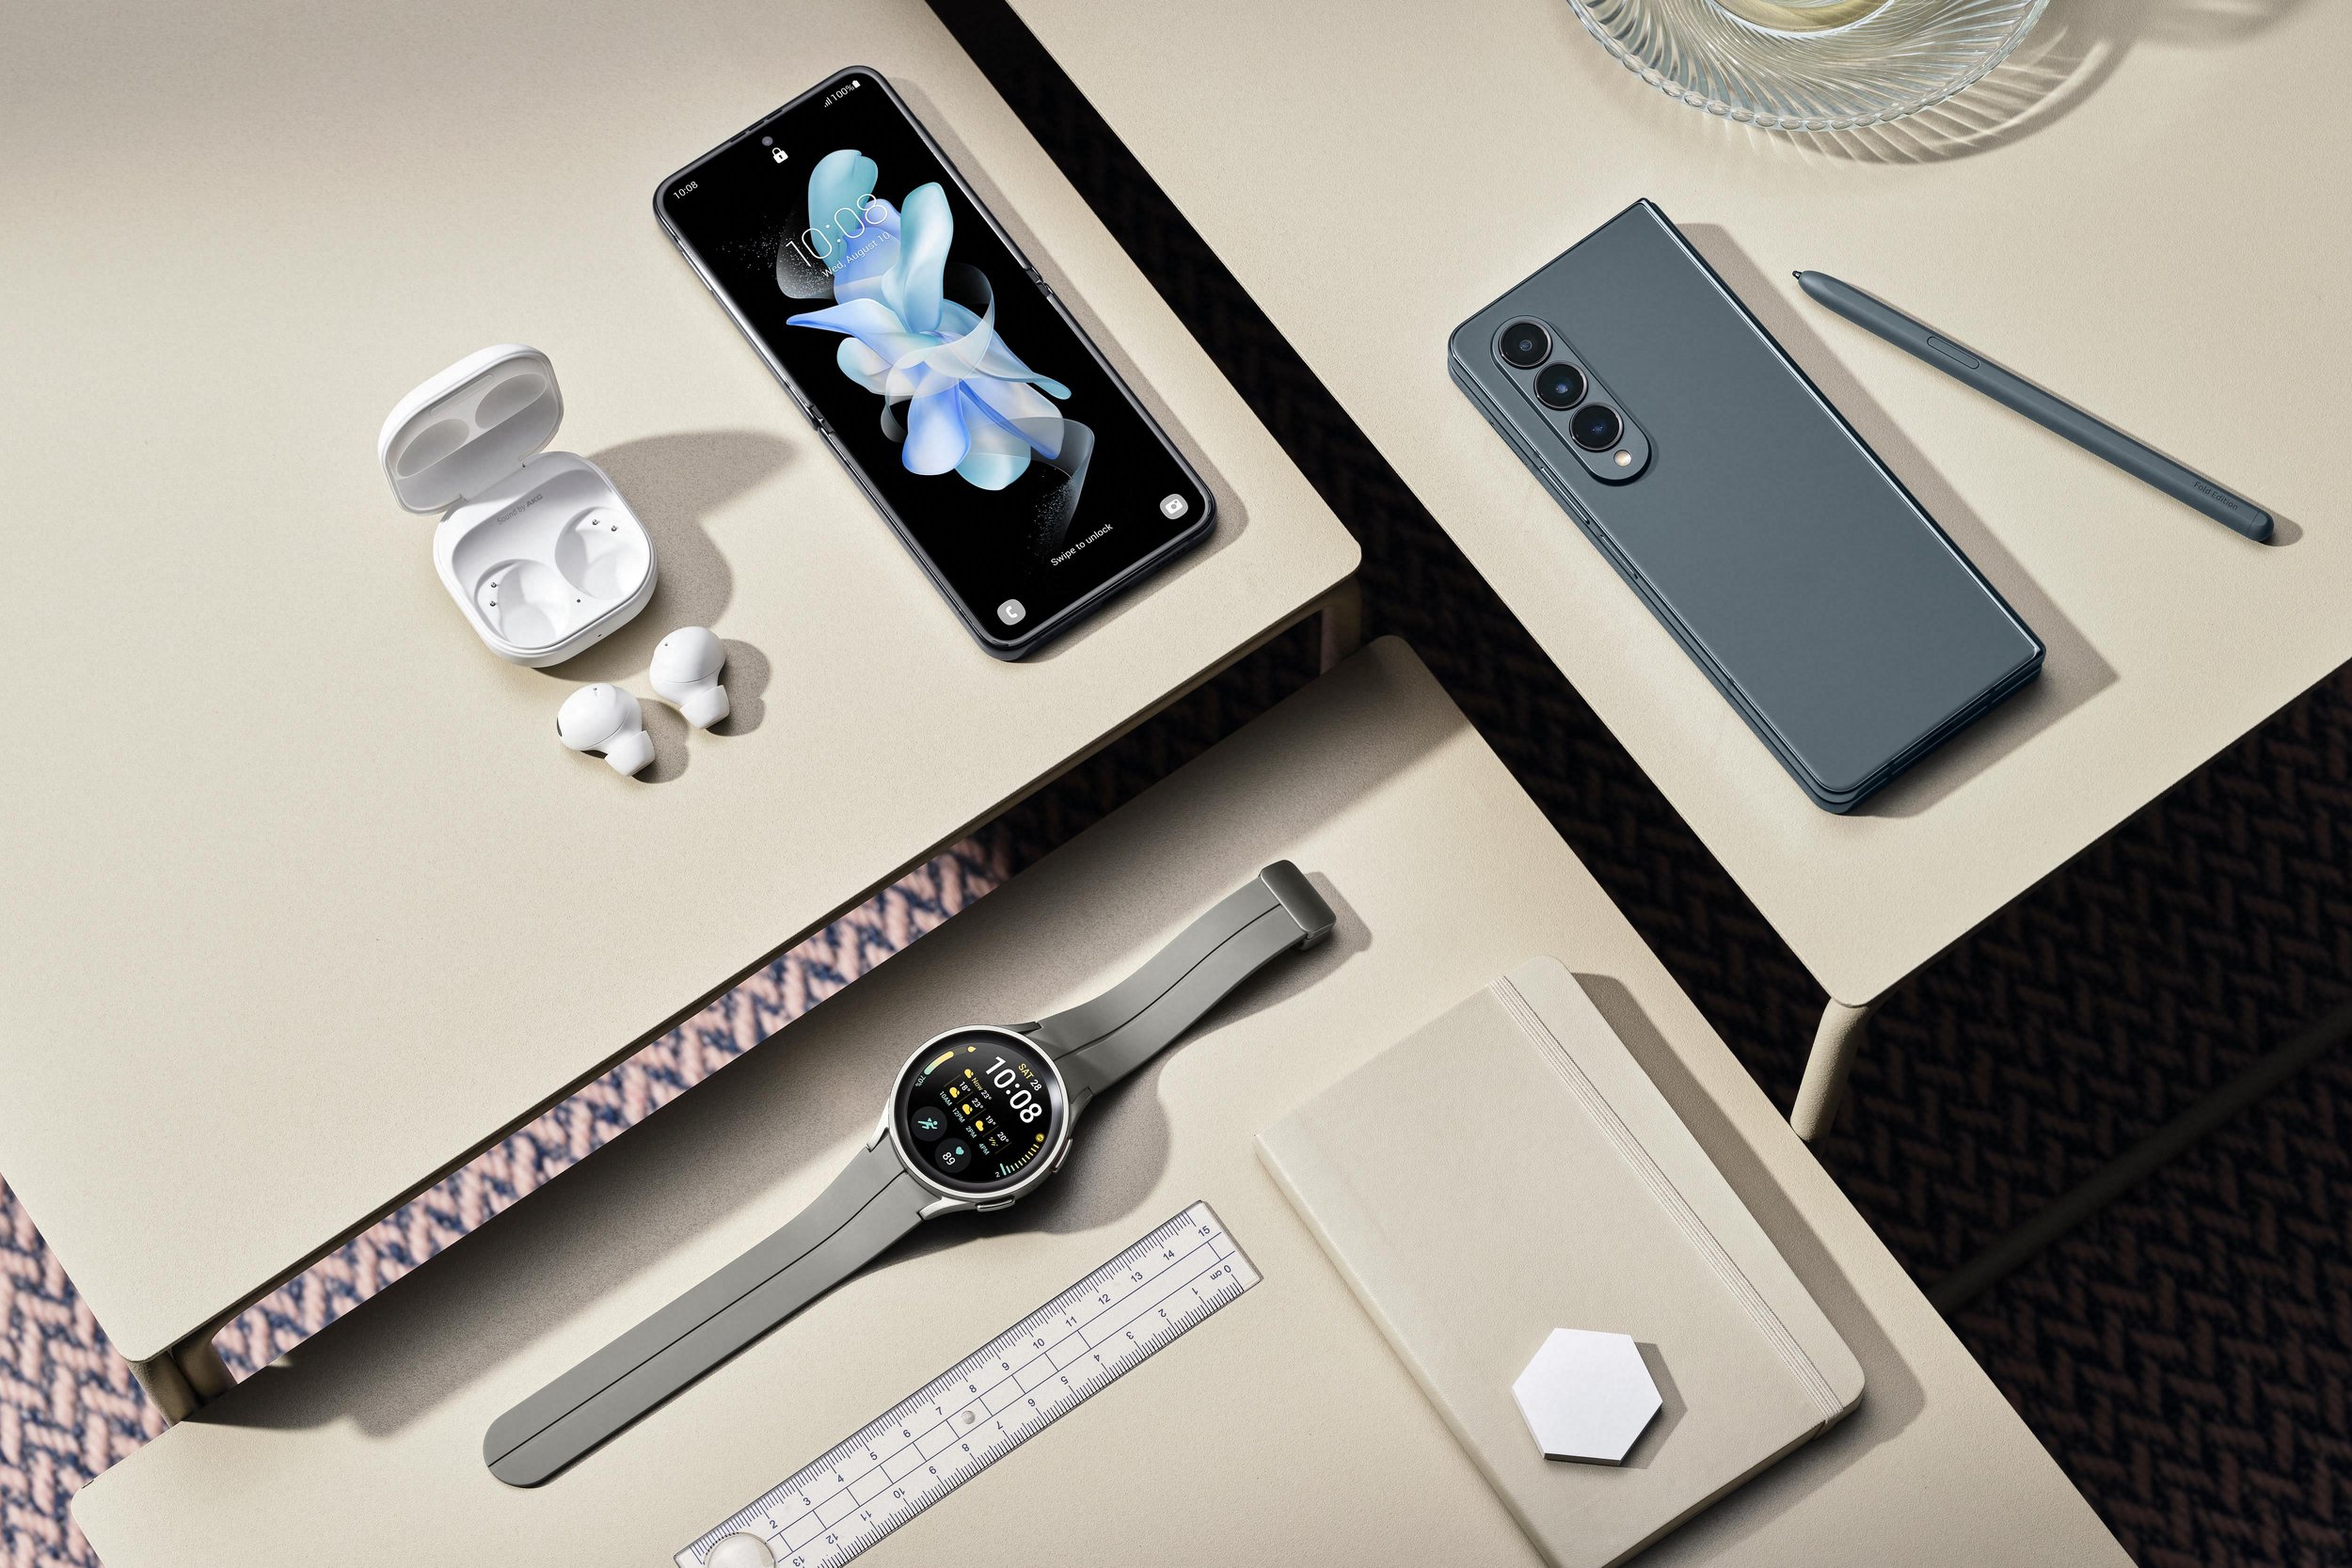 Samsung Galaxy Unpacked 2022: Z Fold 4, Z Flip 4, & Watch 5